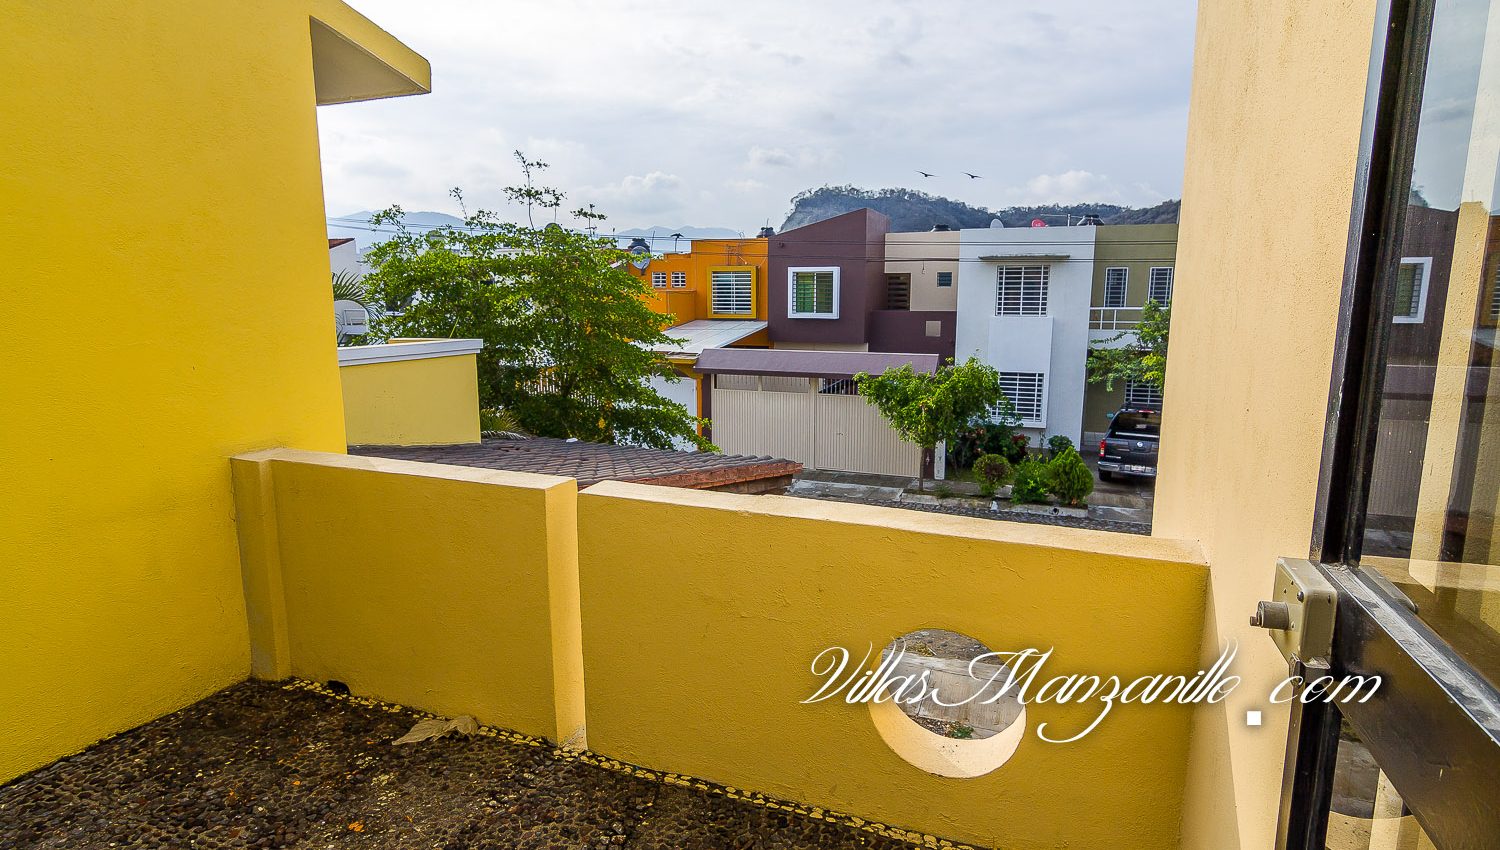 Se Renta For Rent Se Vende For Sale Casa en Villas del Pacifico Manzanillo Colima Mexico Casa Tiburon-12